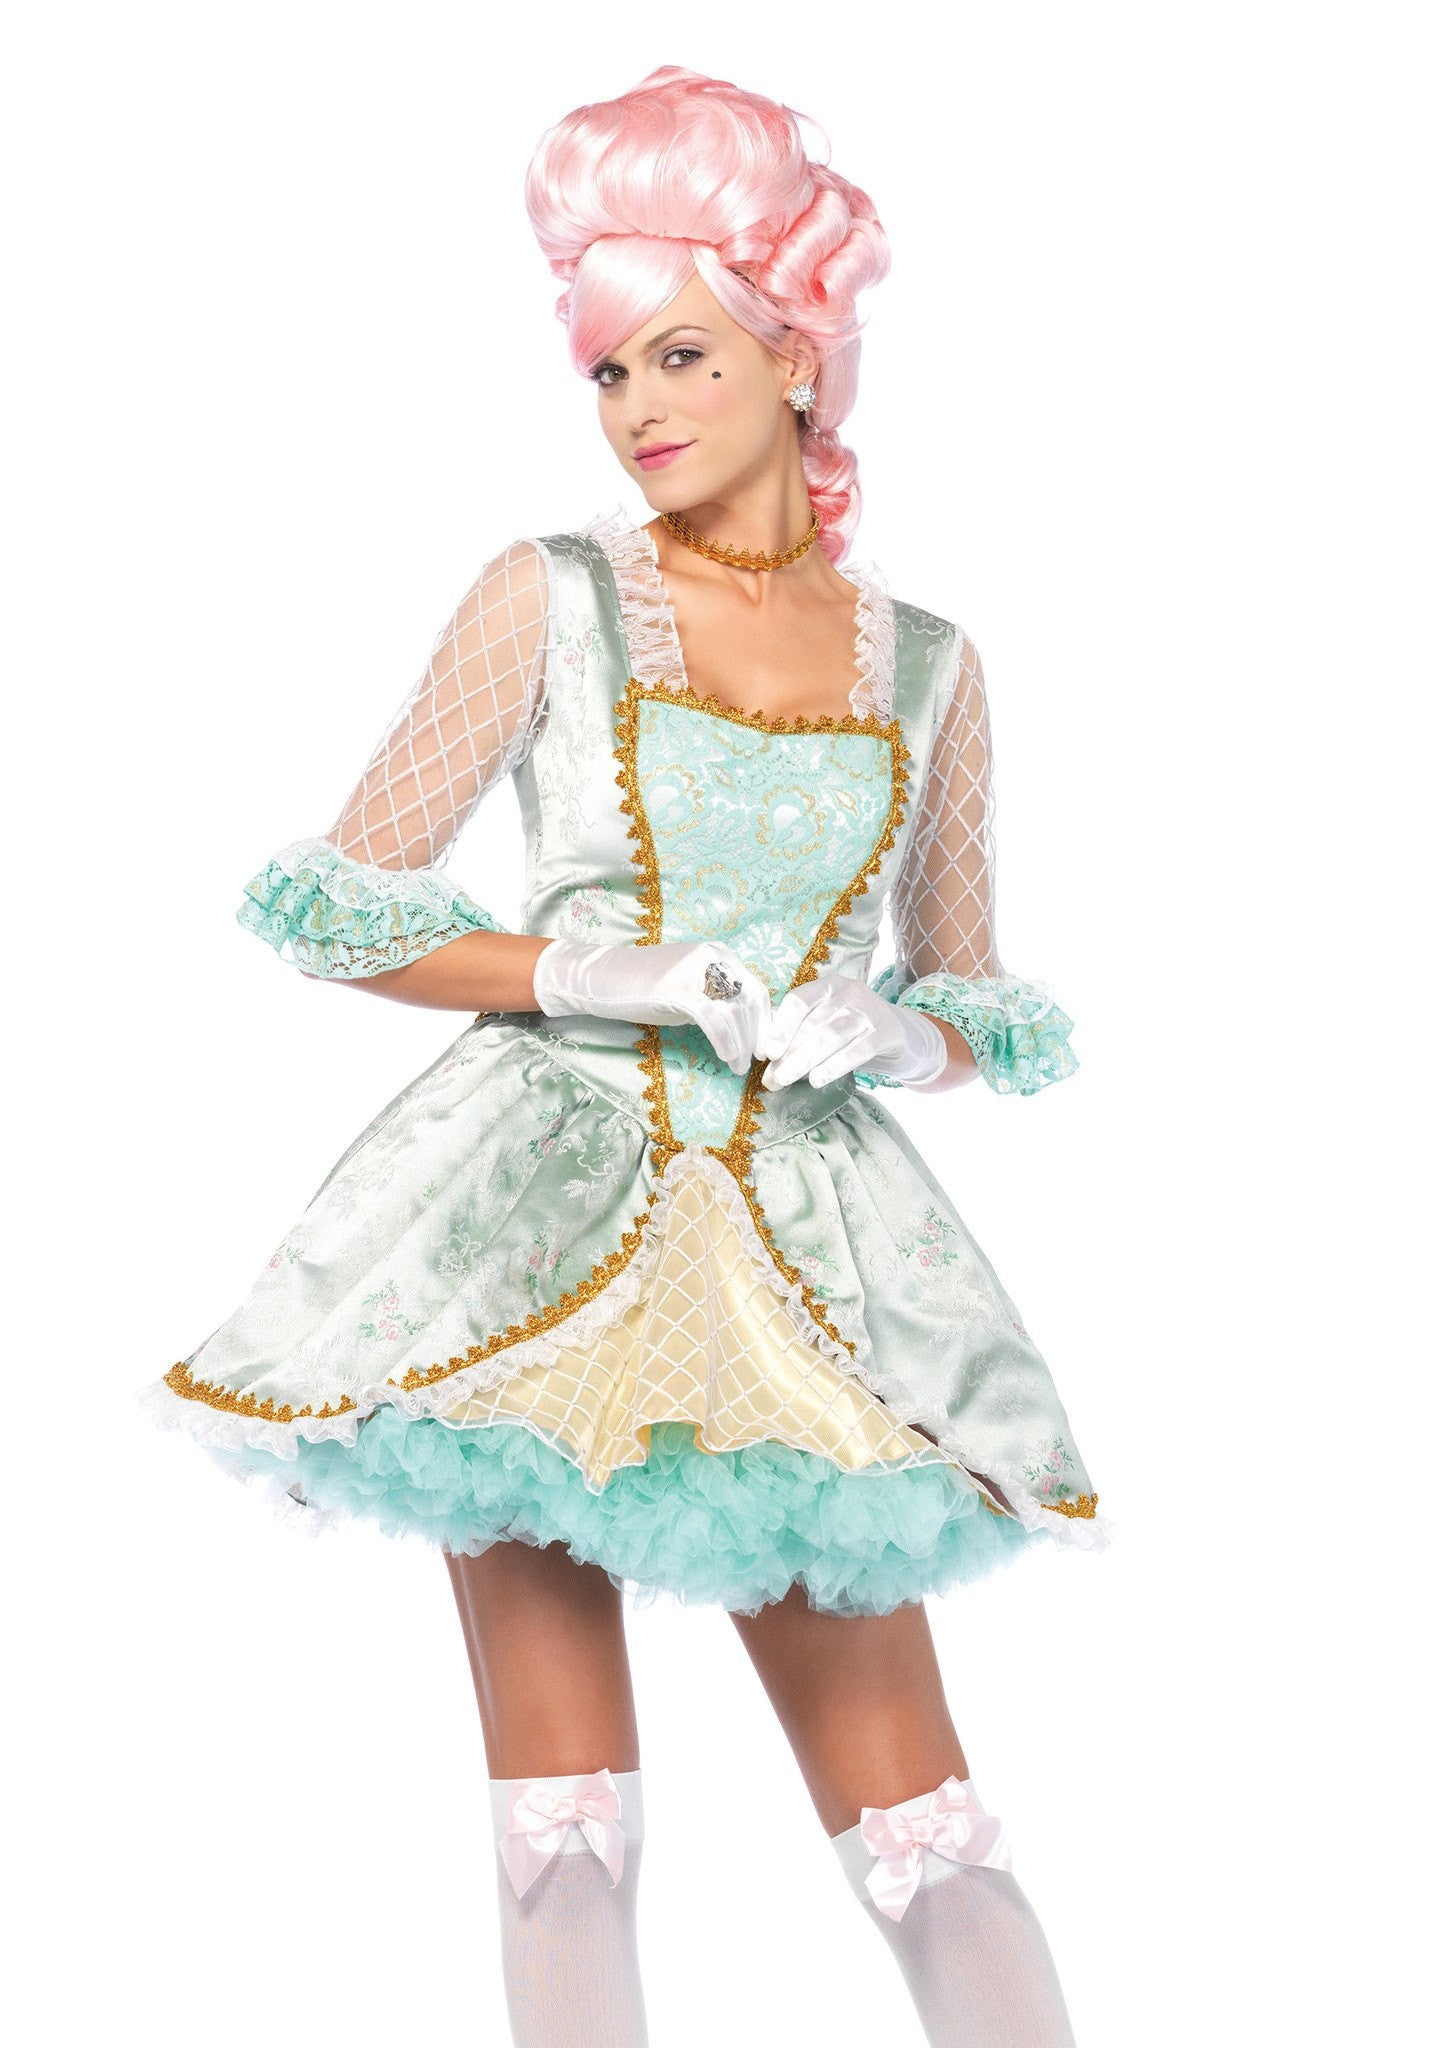 Costume - Deluxe Marie Antoinette Costume